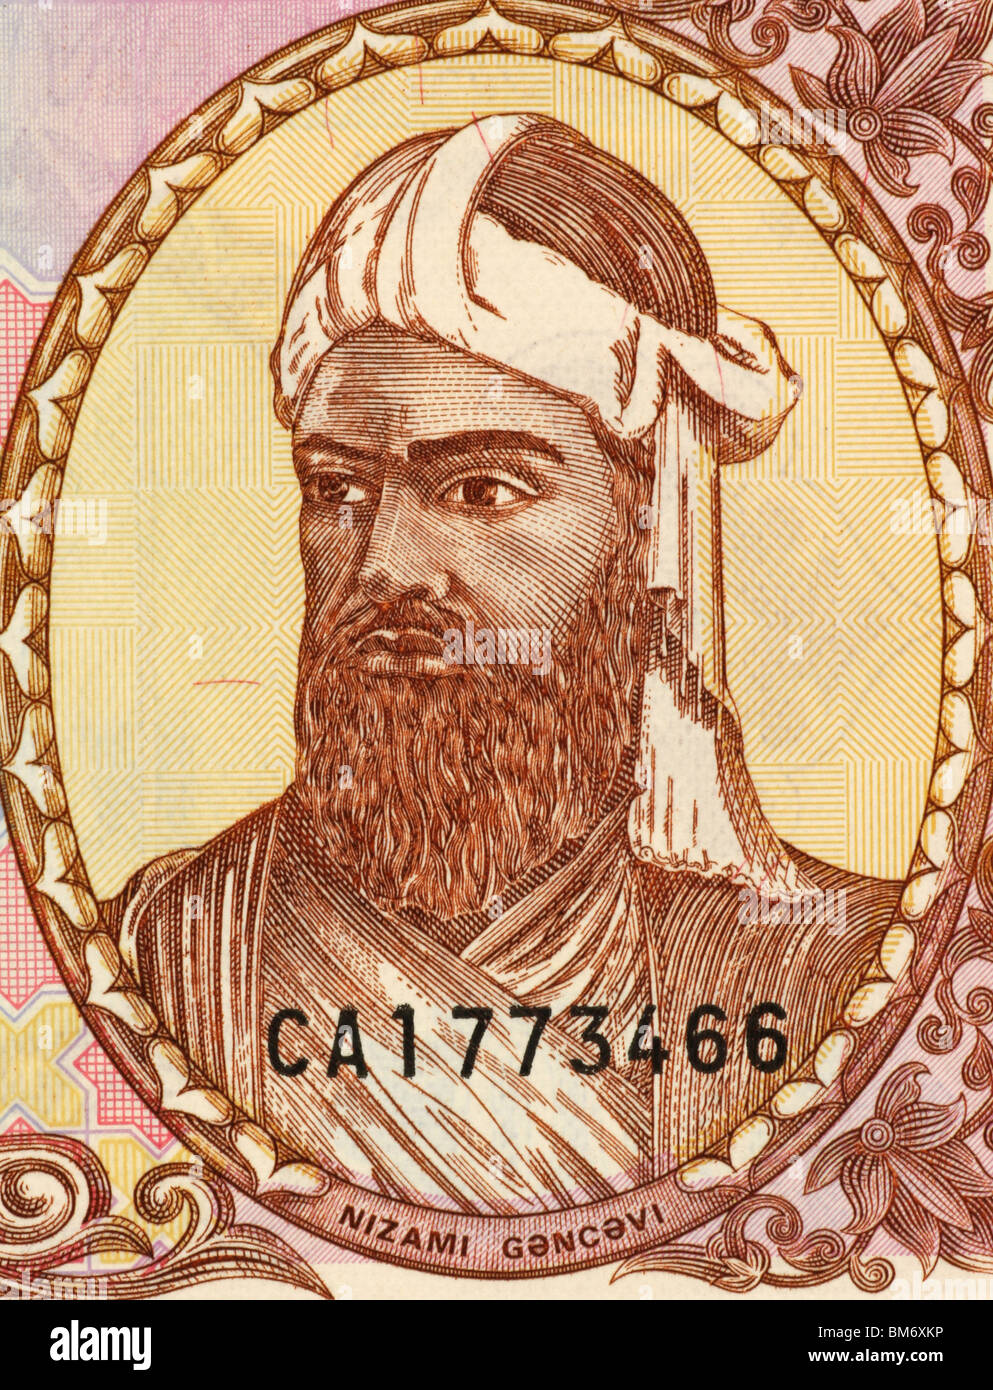 Nezami Ganjavi (1141-1209) on 500 Manat 1993 Banknote from Azerbaijan. Greatest romantic epic poet in Persian literature. Stock Photo